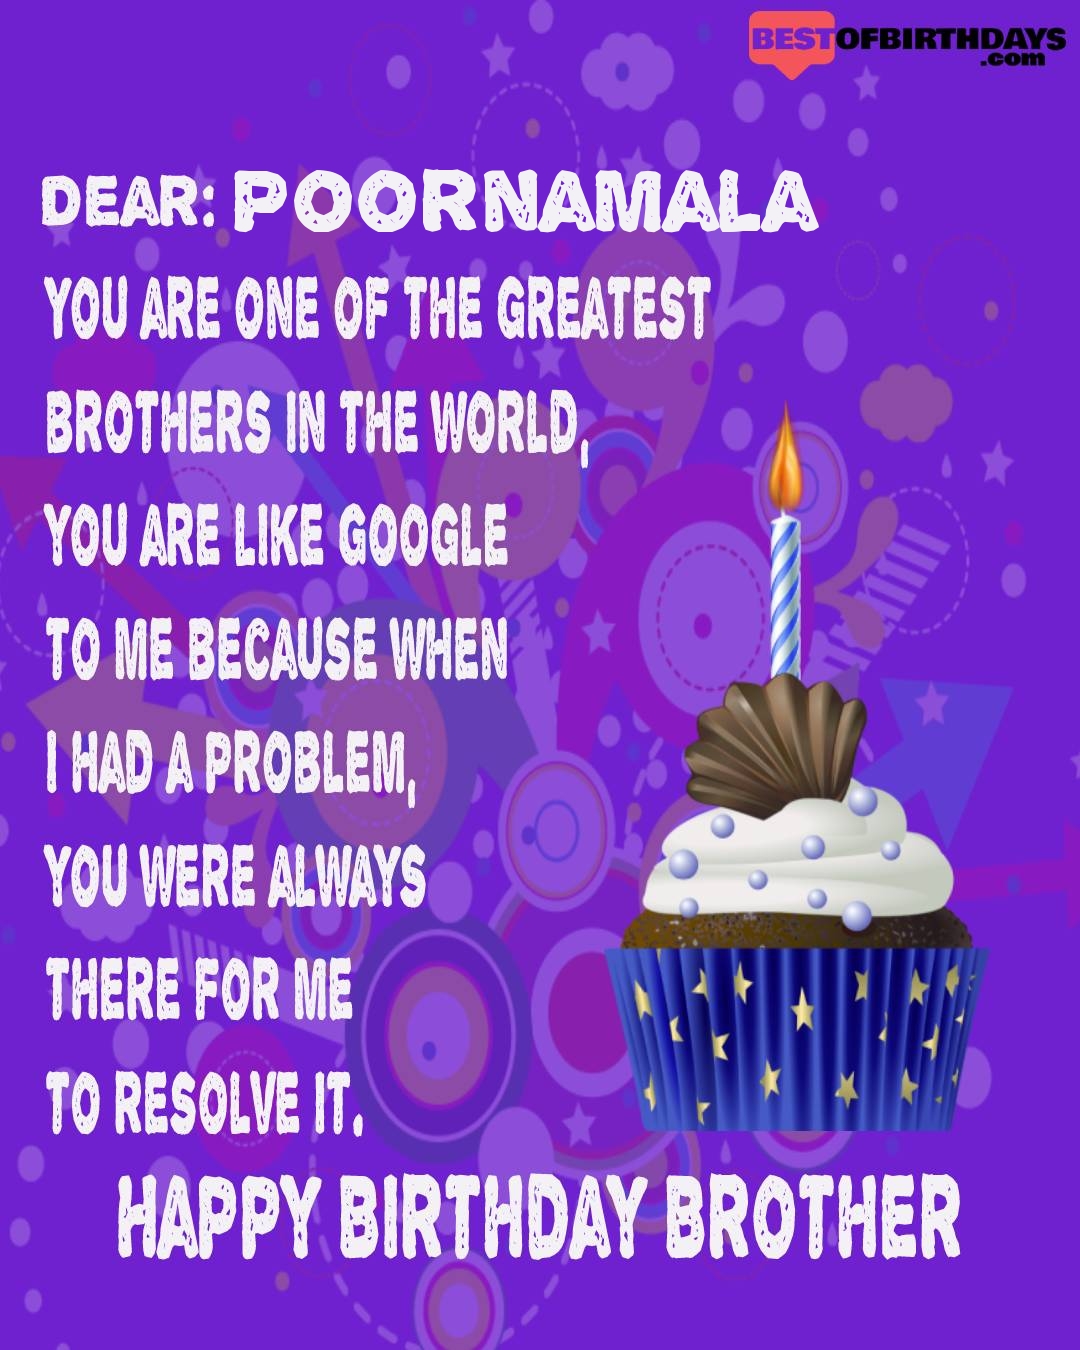 Happy birthday poornamala bhai brother bro